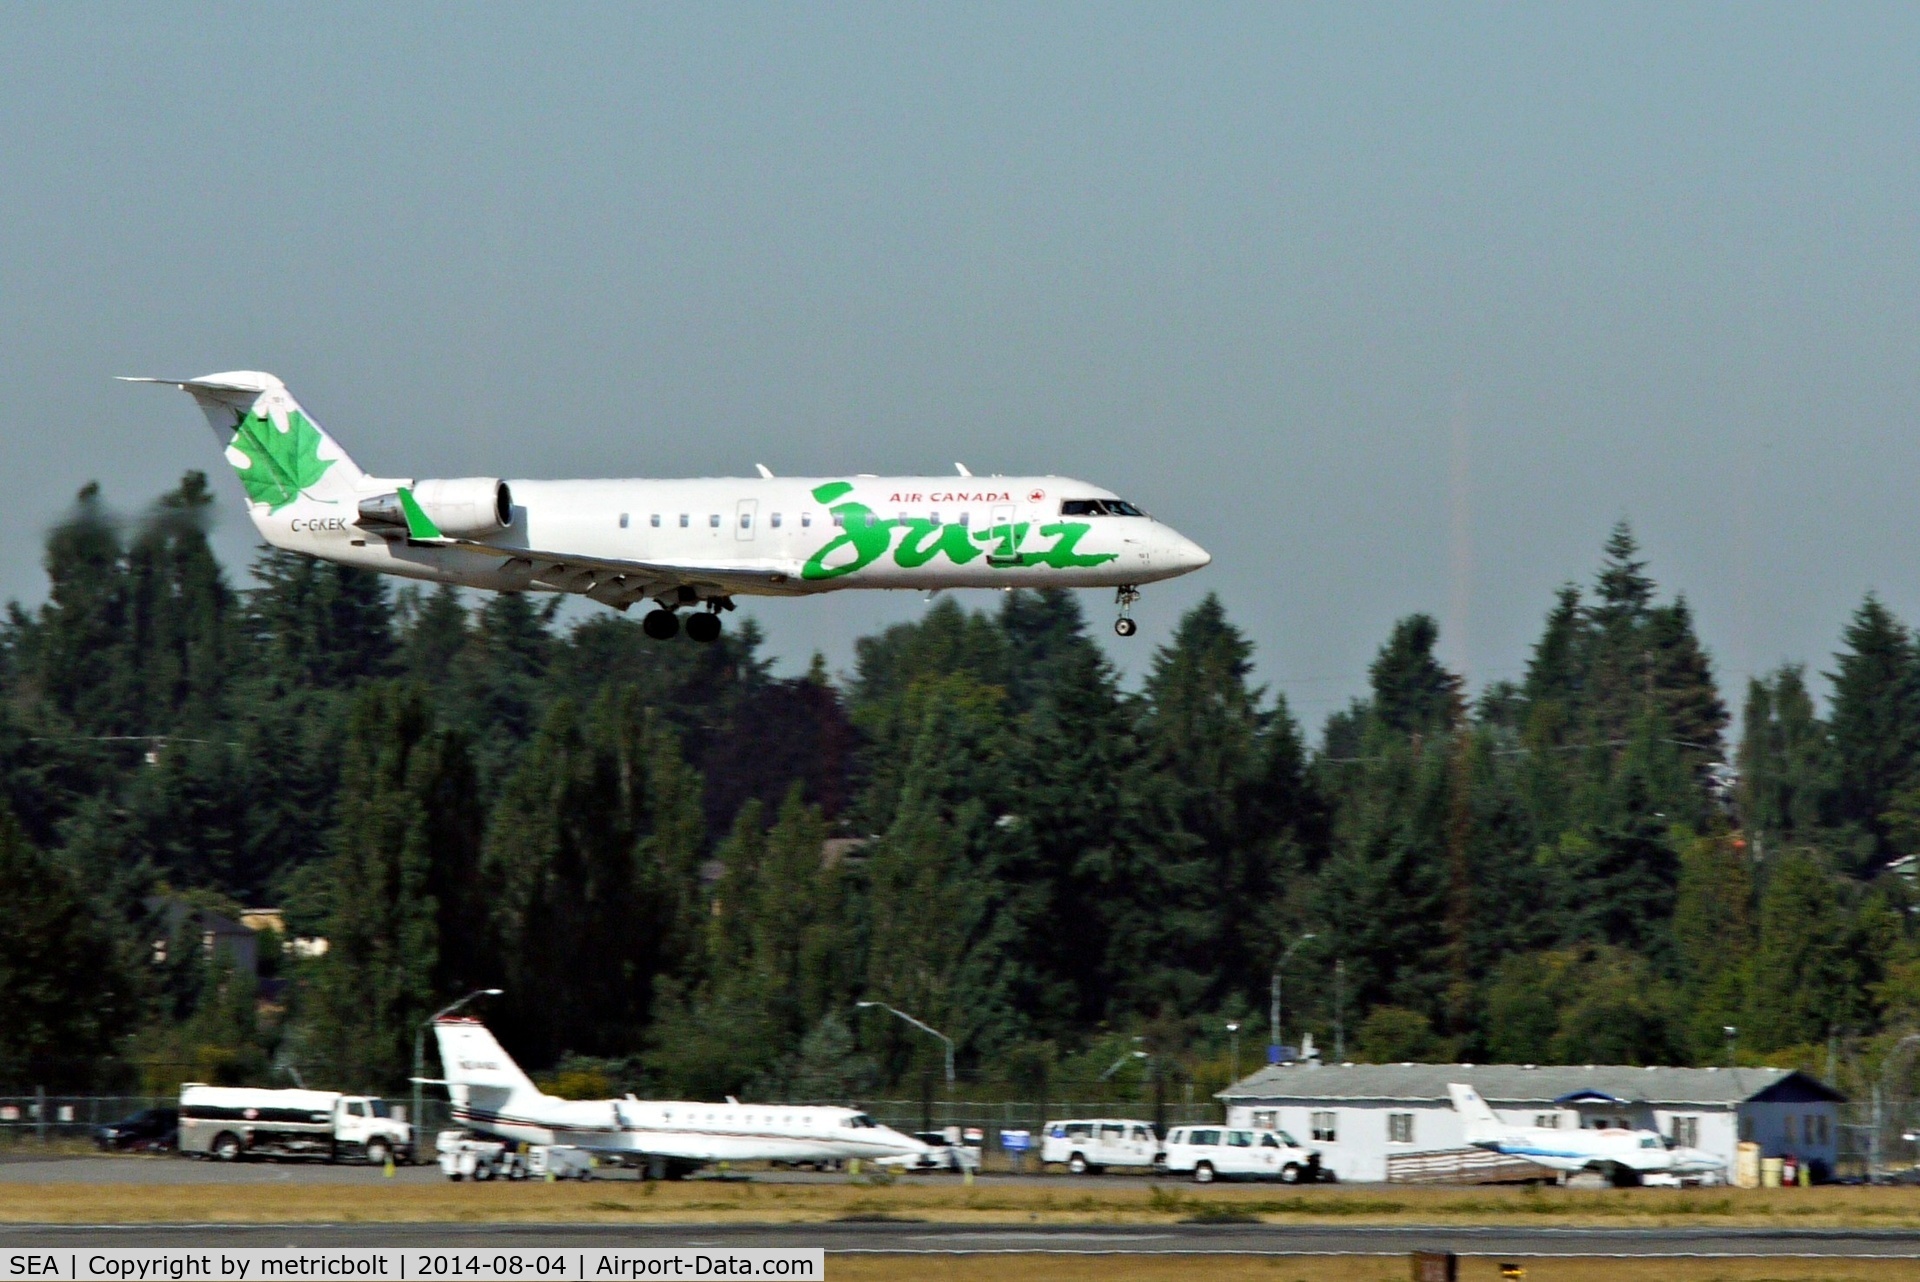 Seattle-tacoma International Airport (SEA) - Jazz landing in Seattle